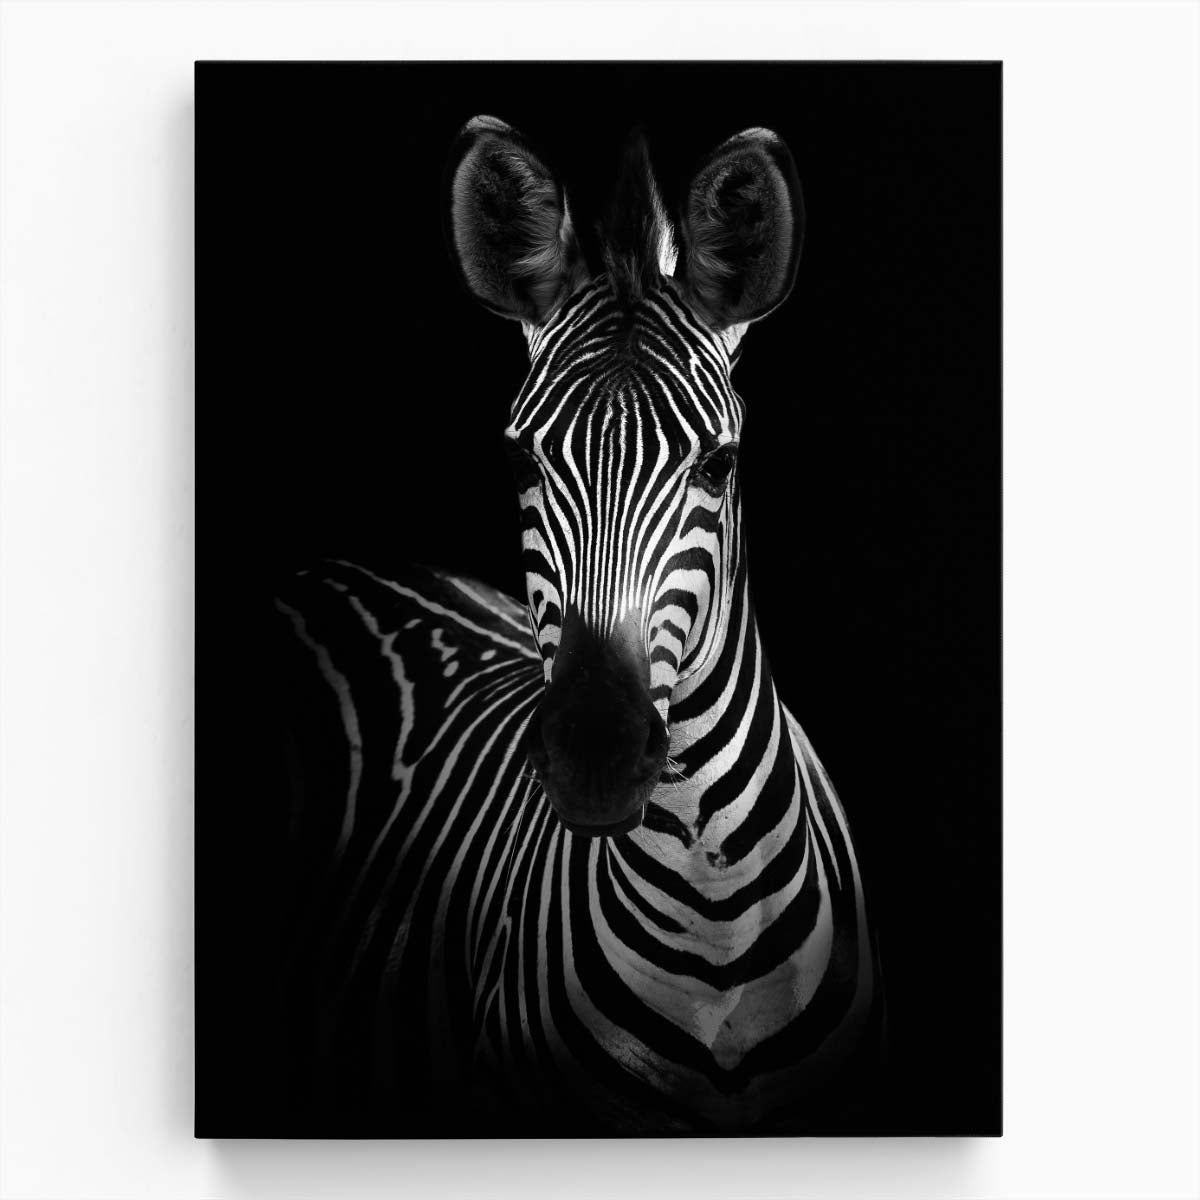 Monochrome Zebra Portrait - African Wildlife Photography Artwork by Luxuriance Designs, made in USA